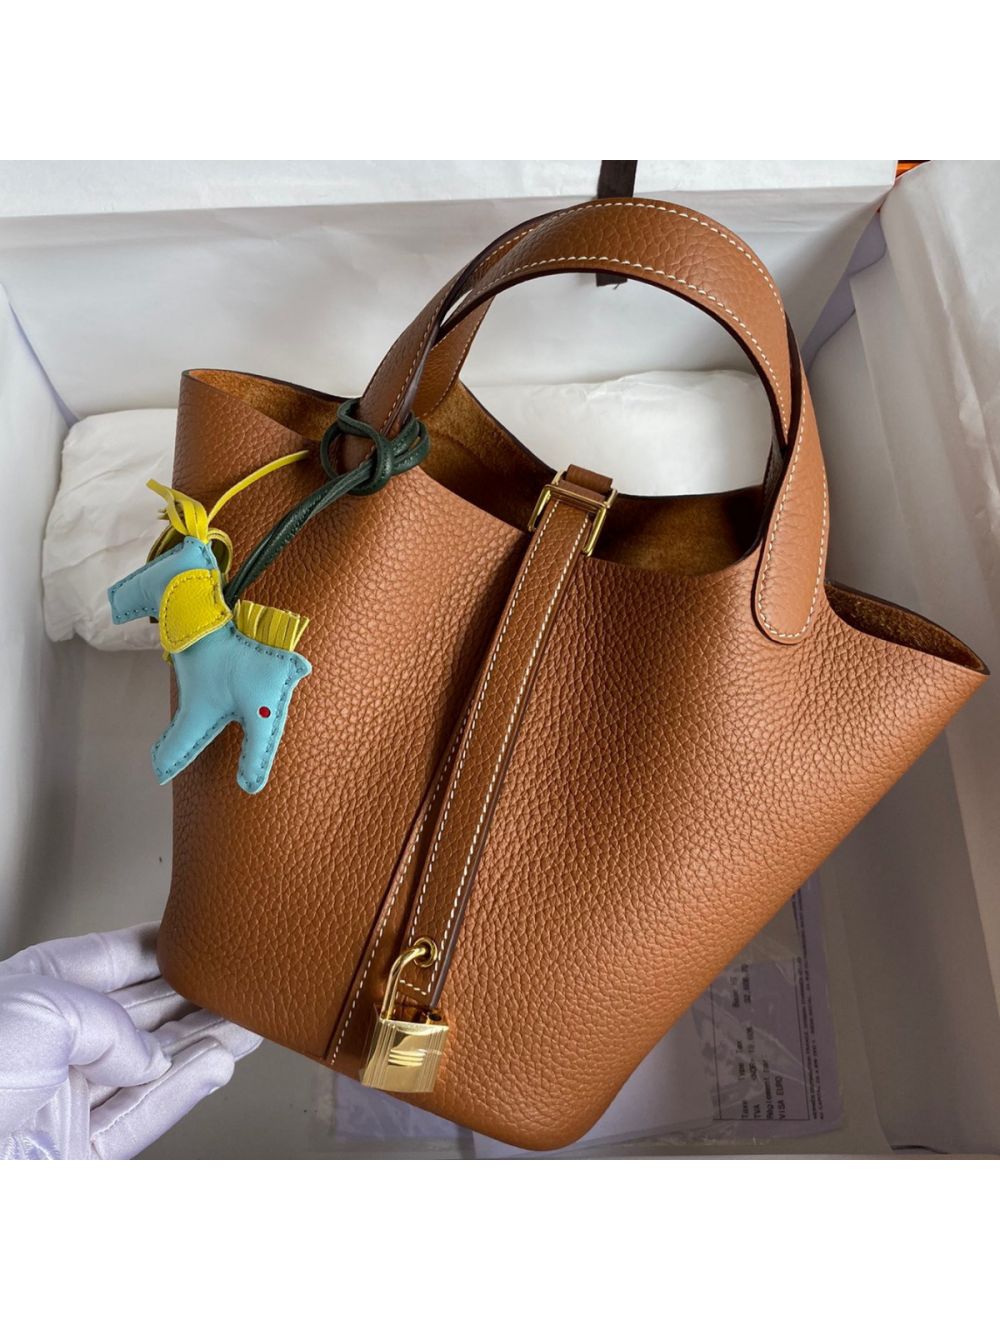 Hermes Picotin Strap, Picotin Leather Bag Strap